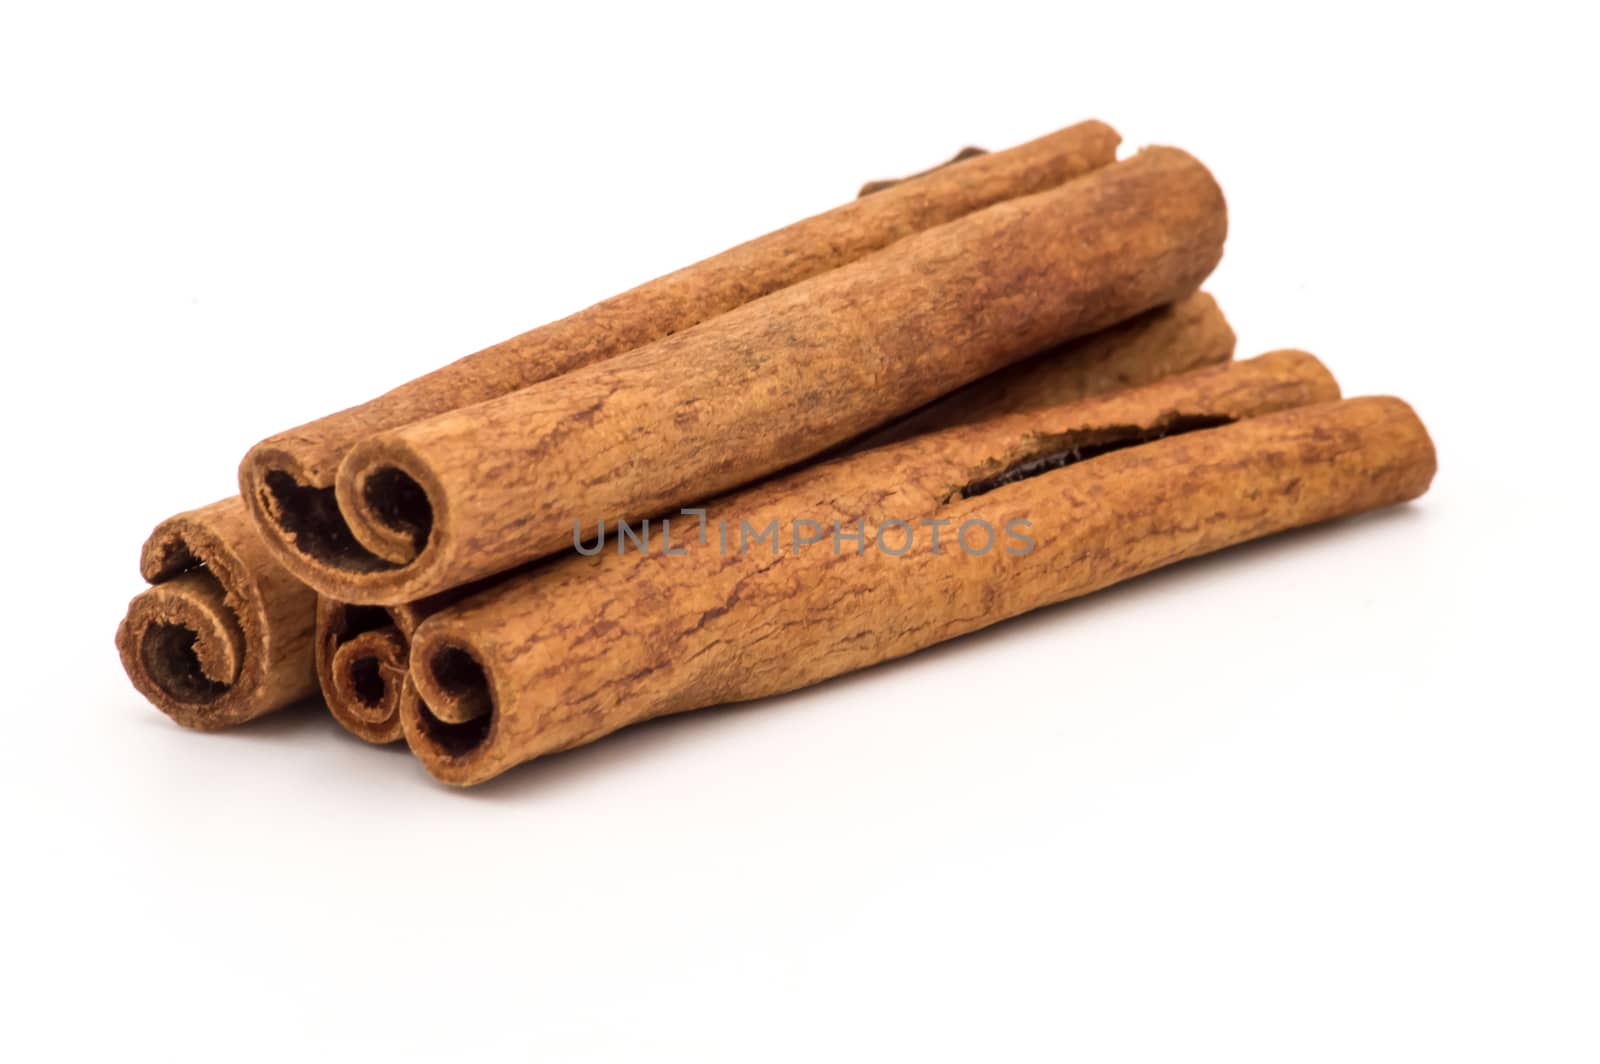 Three cinnamon sticks on a white  by Philou1000